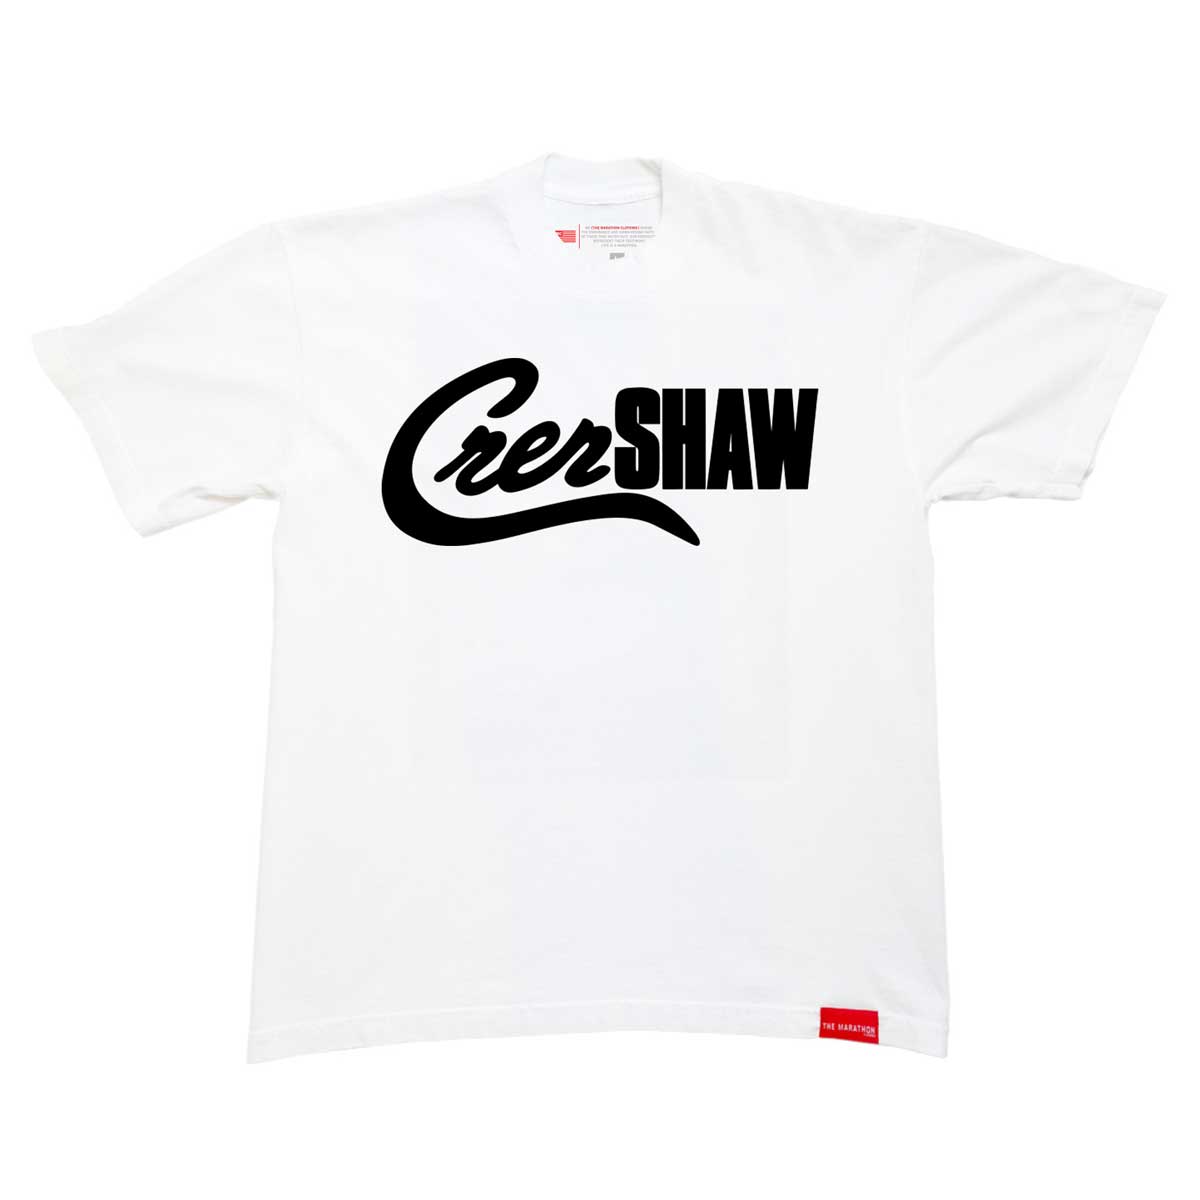 Crenshaw Mashup T-shirt - White/Black